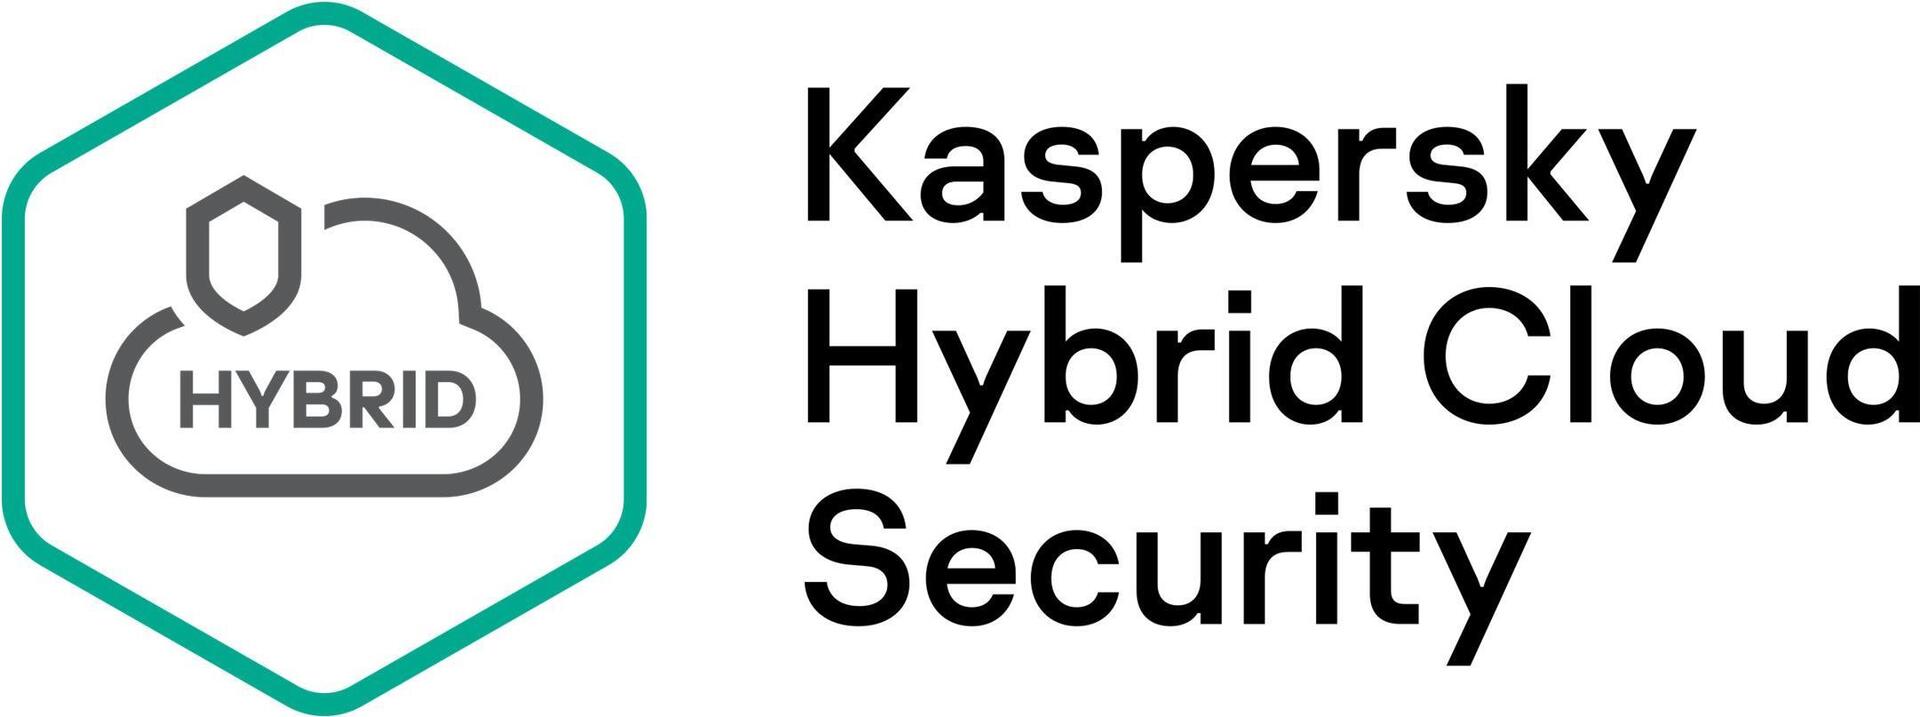 Kaspersky Hybrid Cloud Security Desktop (KL4155XAMF8)